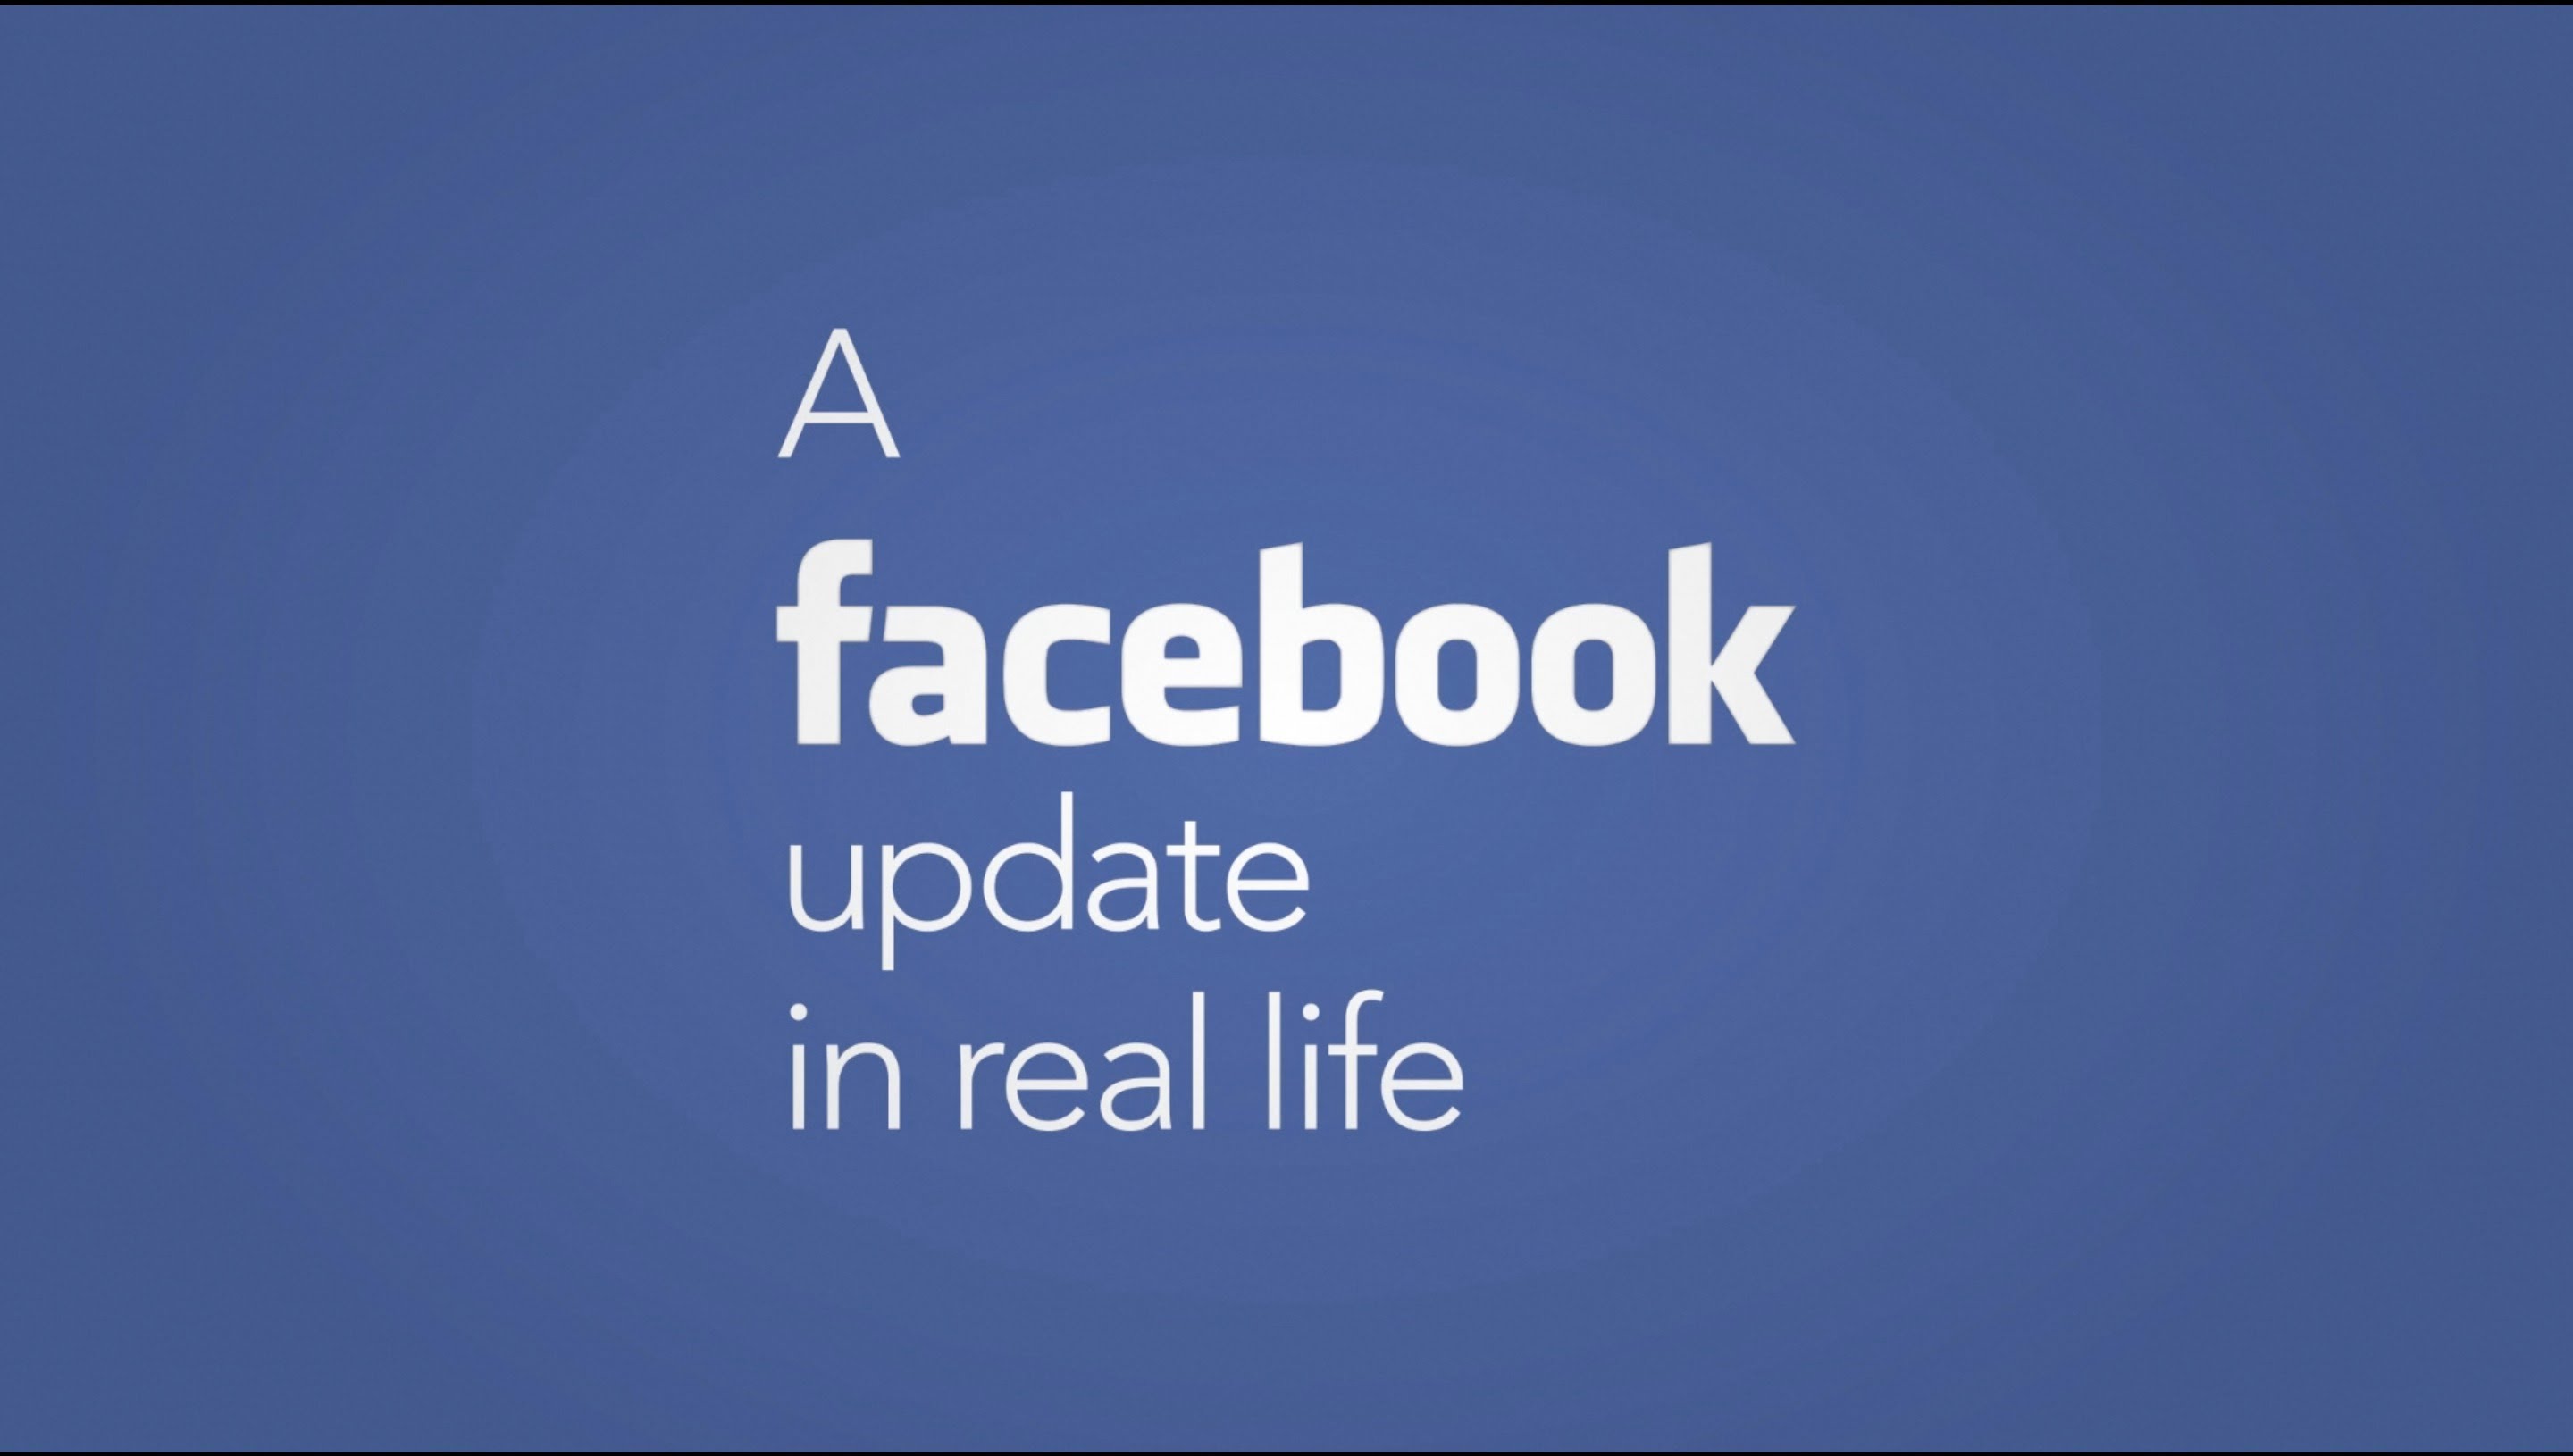 Kā izskatītos Facebook reālajā dzīvē? (A Facebook Update In Real Life)